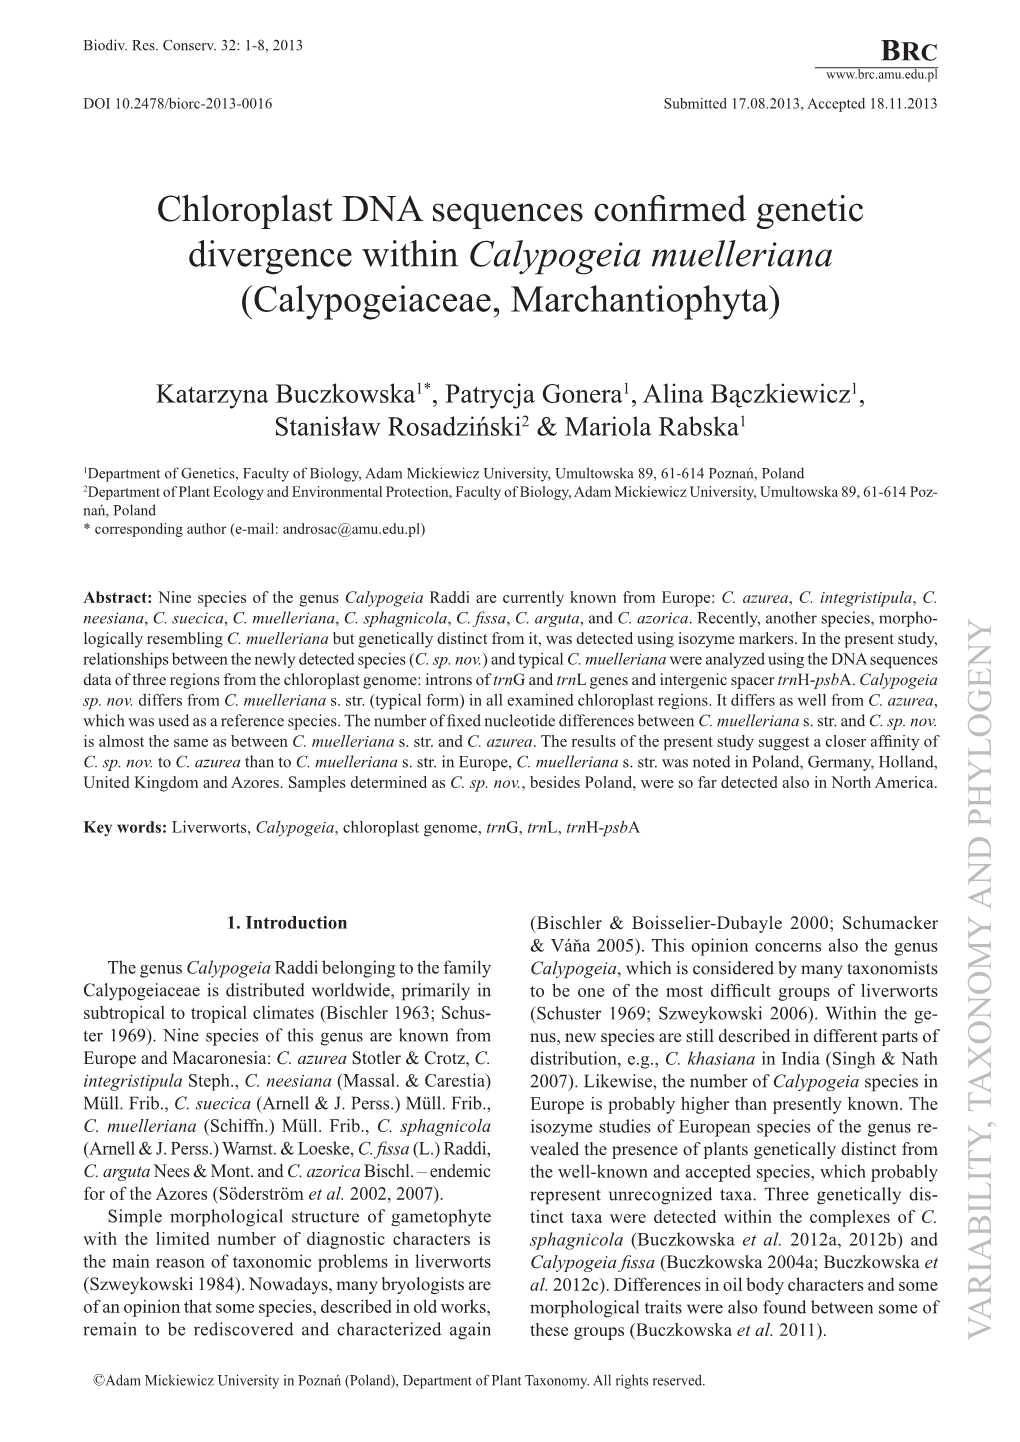 Chloroplast DNA Sequences Confirmed Genetic Divergence Within Calypogeia Muelleriana (Calypogeiaceae, Marchantiophyta)